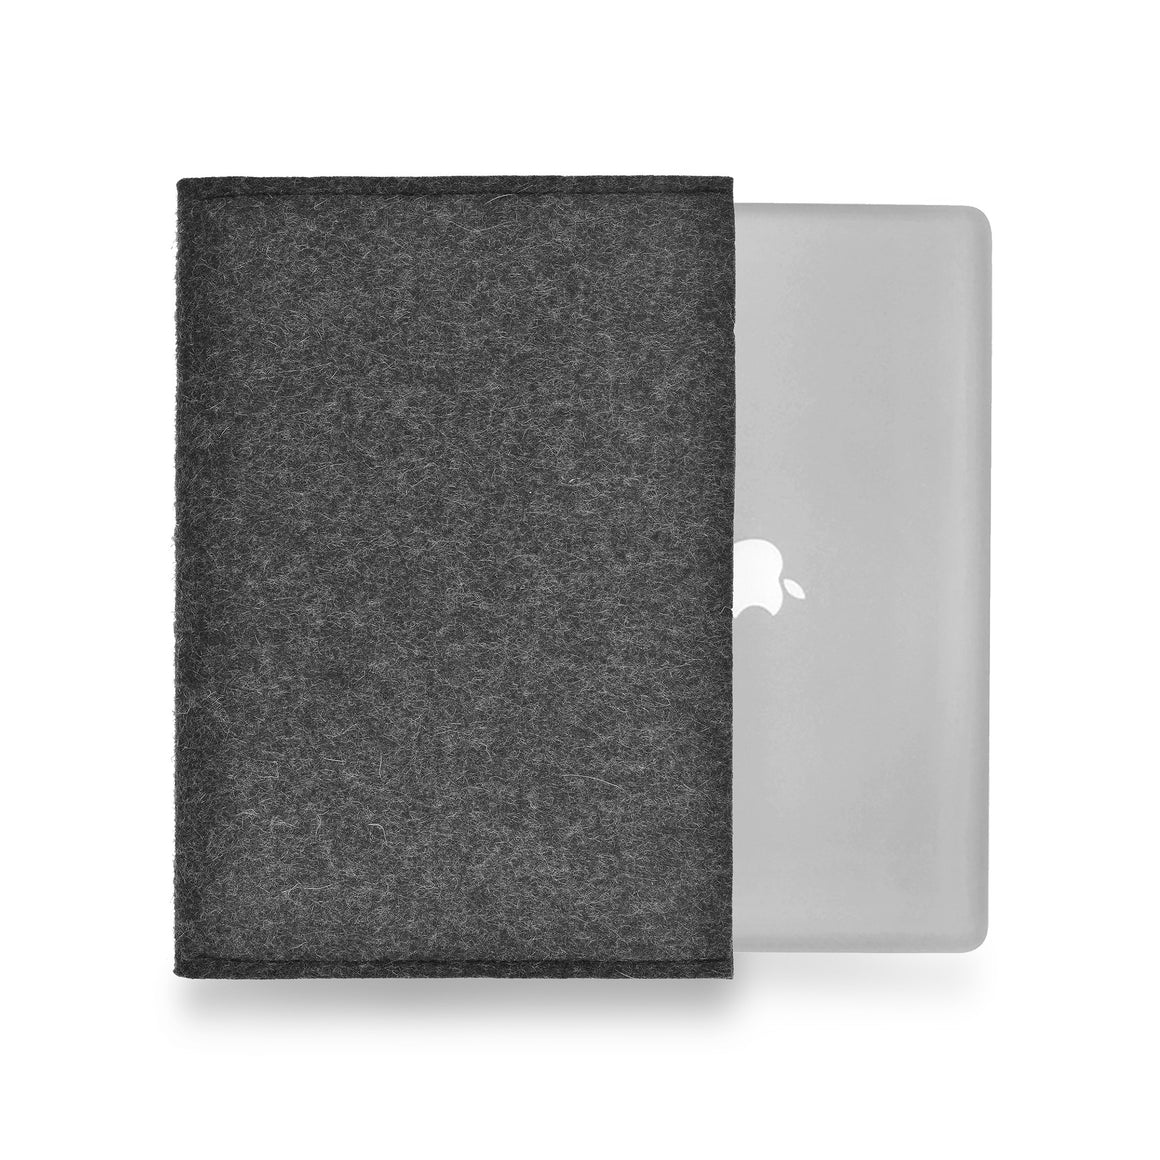 MacBook Air 11 inch Wool Felt Charcoal Landscape - Wrappers UK